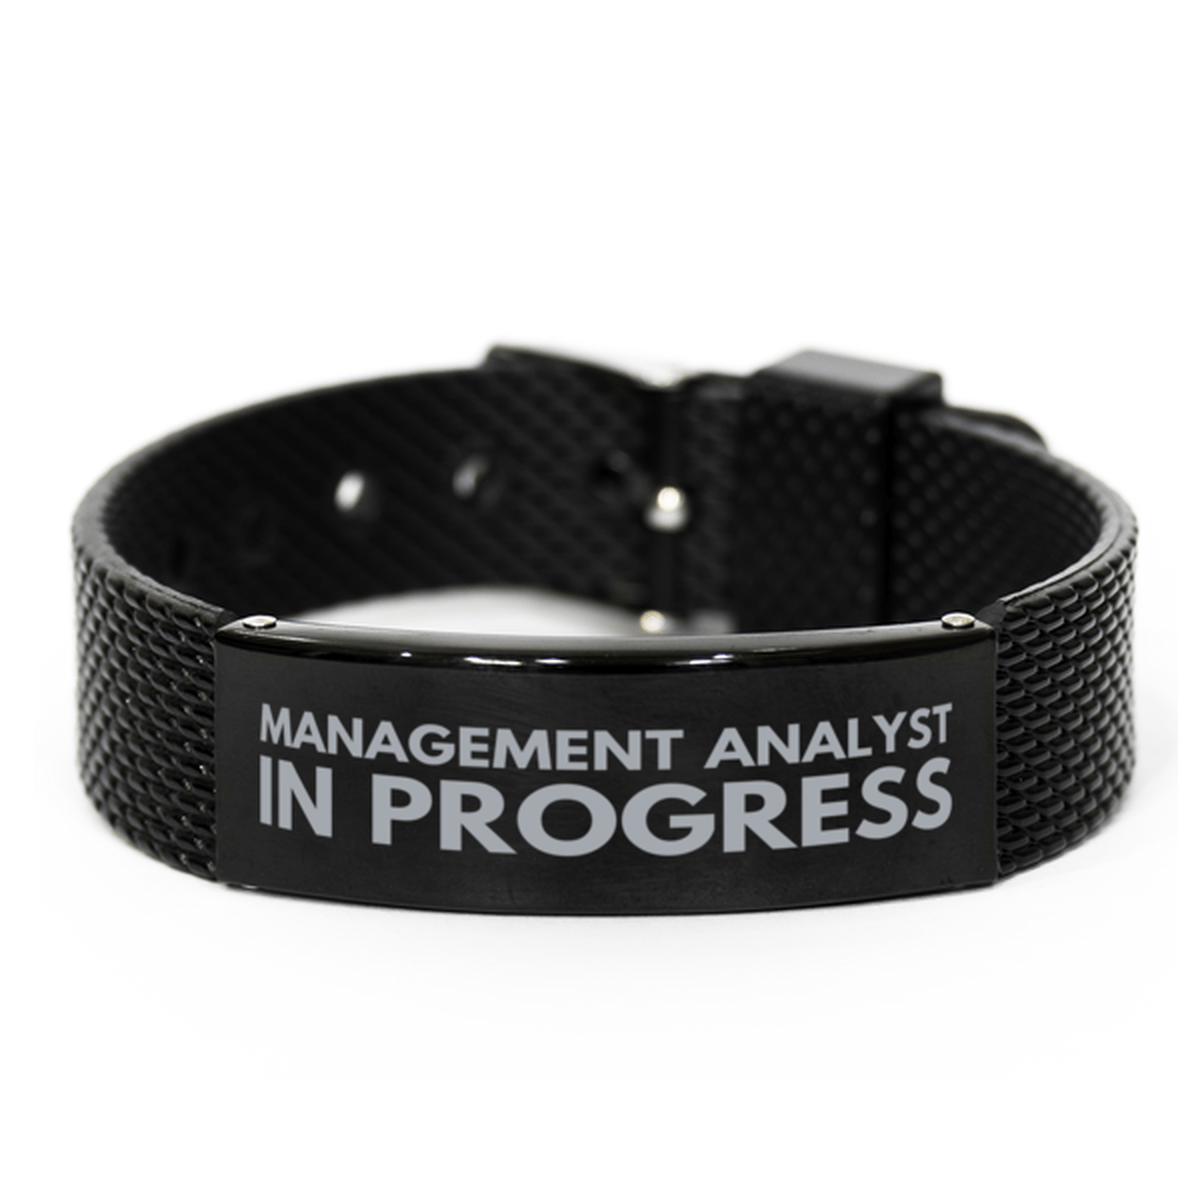 Inspirational Management Analyst Black Shark Mesh Bracelet, Management Analyst In Progress, Best Graduation Gifts for Students